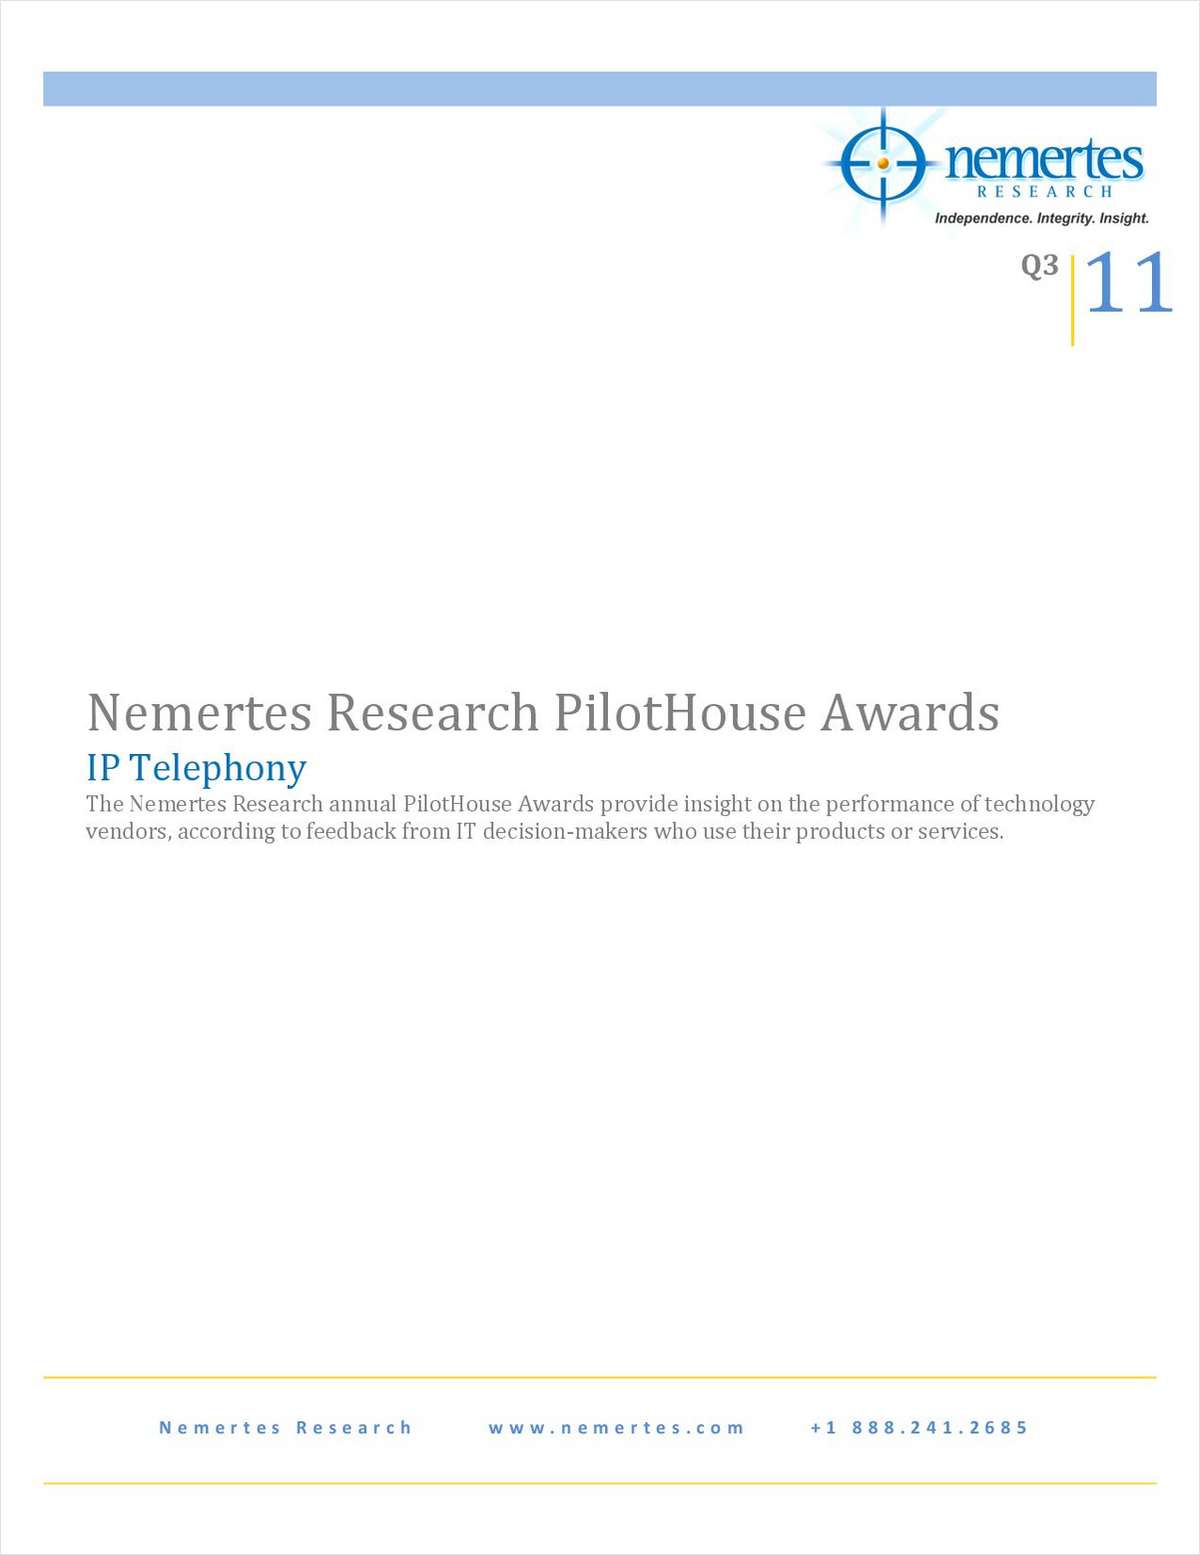 Nemertes Research PilotHouse Awards: IP Telephony